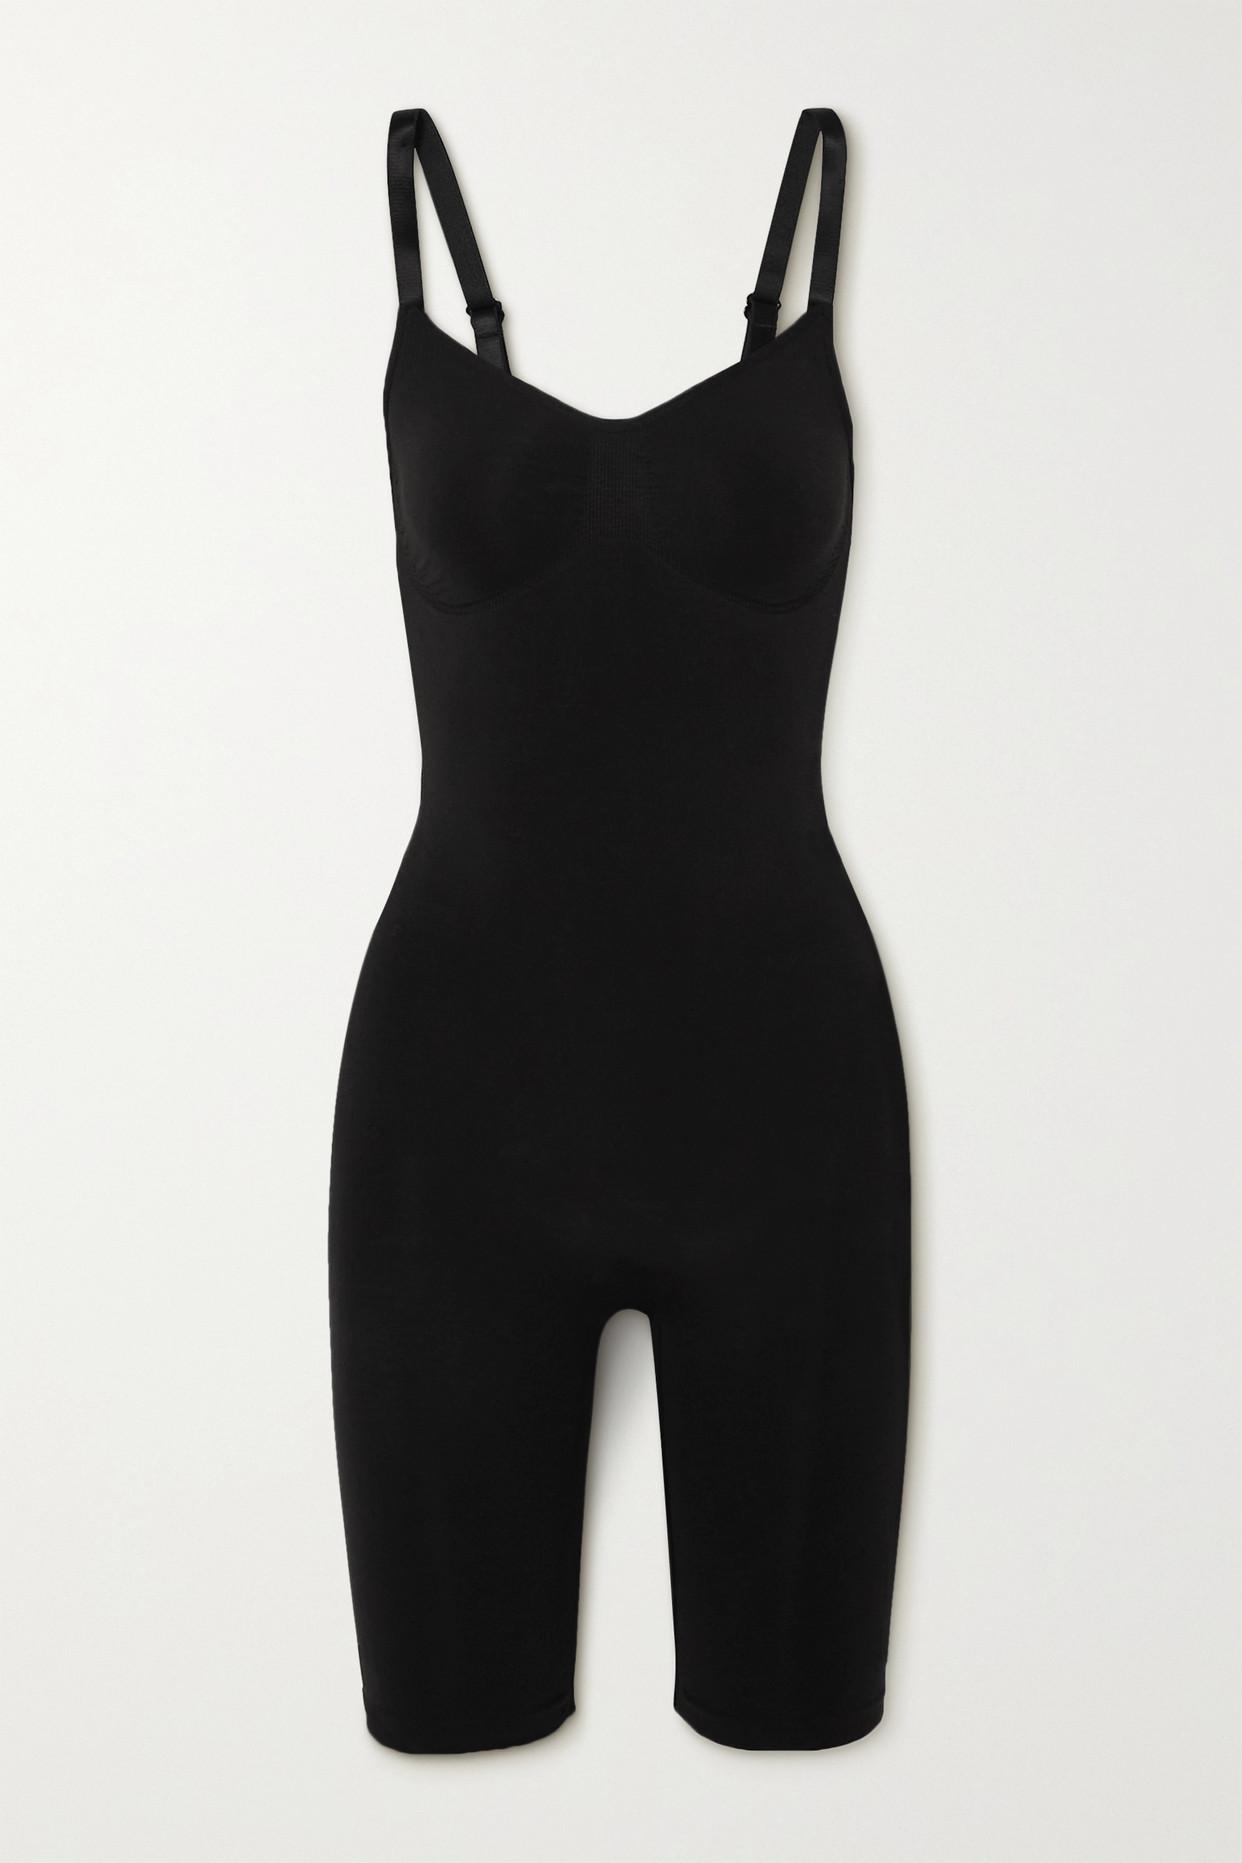 Skims Seamless Sculpt Low Back Bodysuit in Black | Lyst